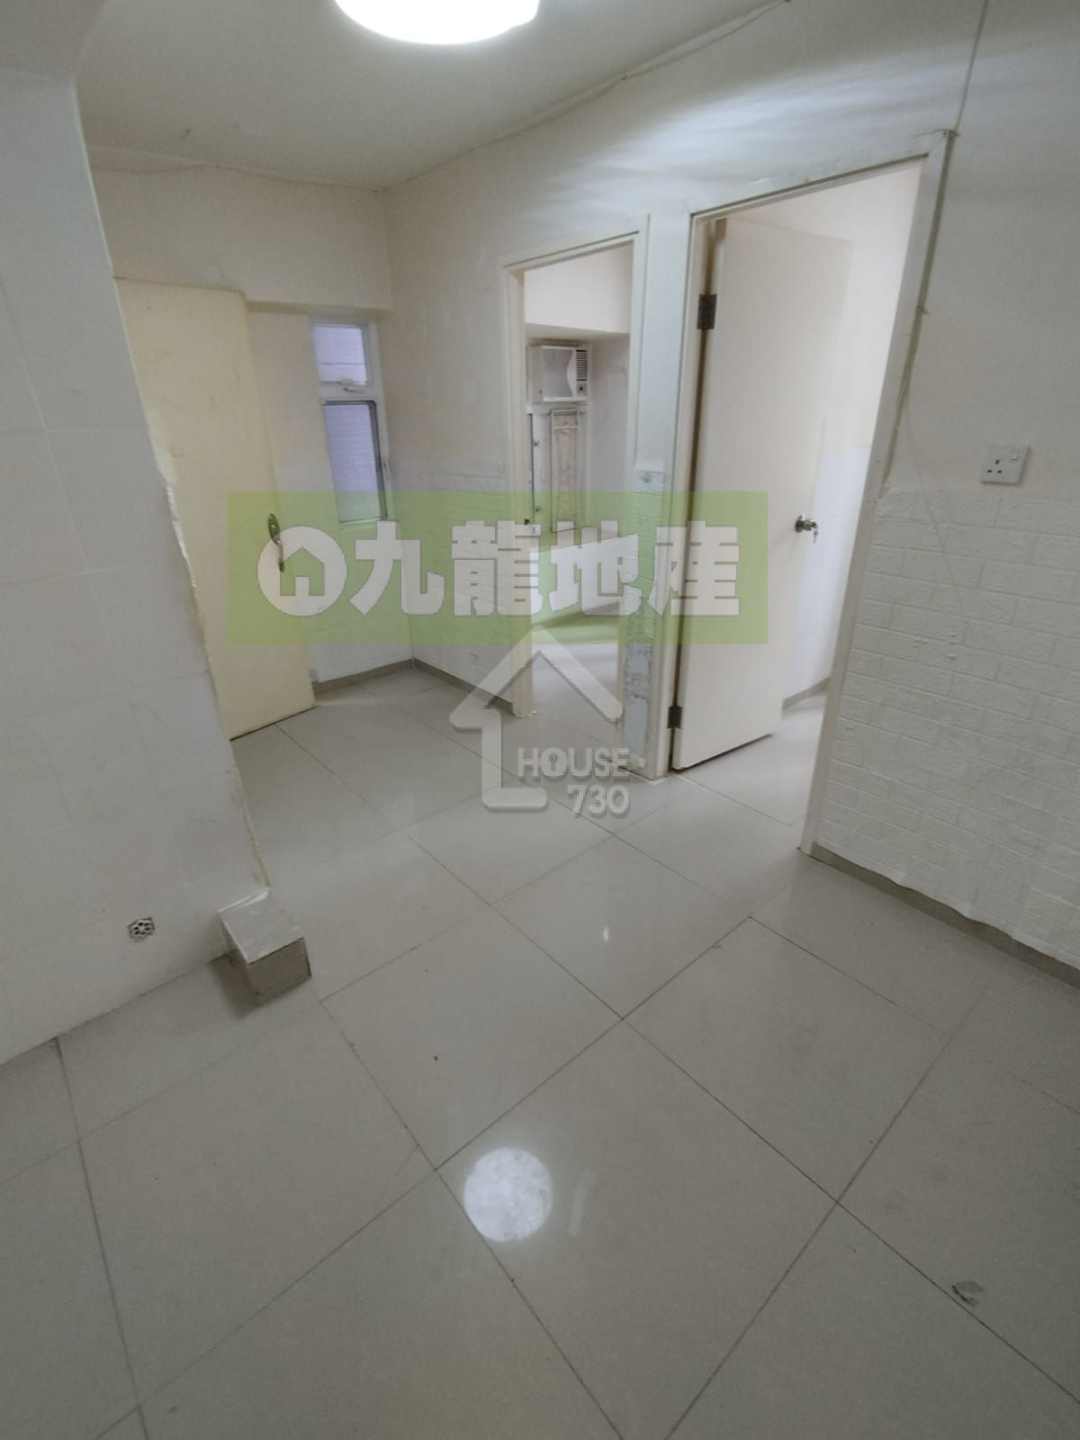 Sham Shui Po HAI TIN MANSION Middle Floor Living Room House730-6580209